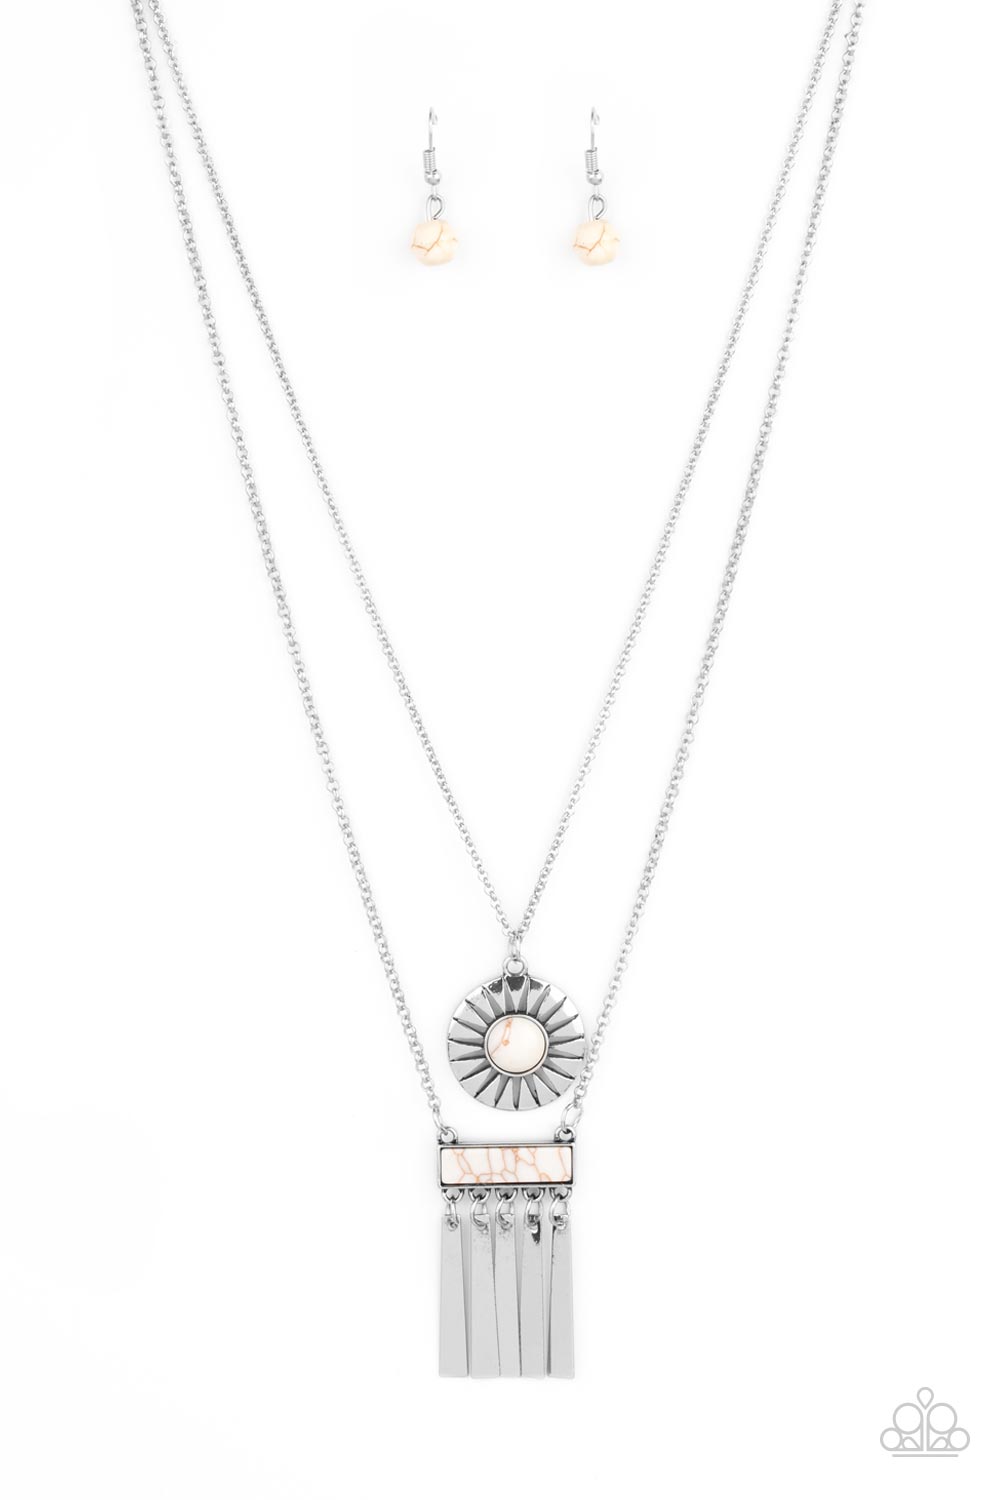 oak-sisters-jewelry-sunburst-rustica-white-necklace-paparazzi-accessories-by-lisa